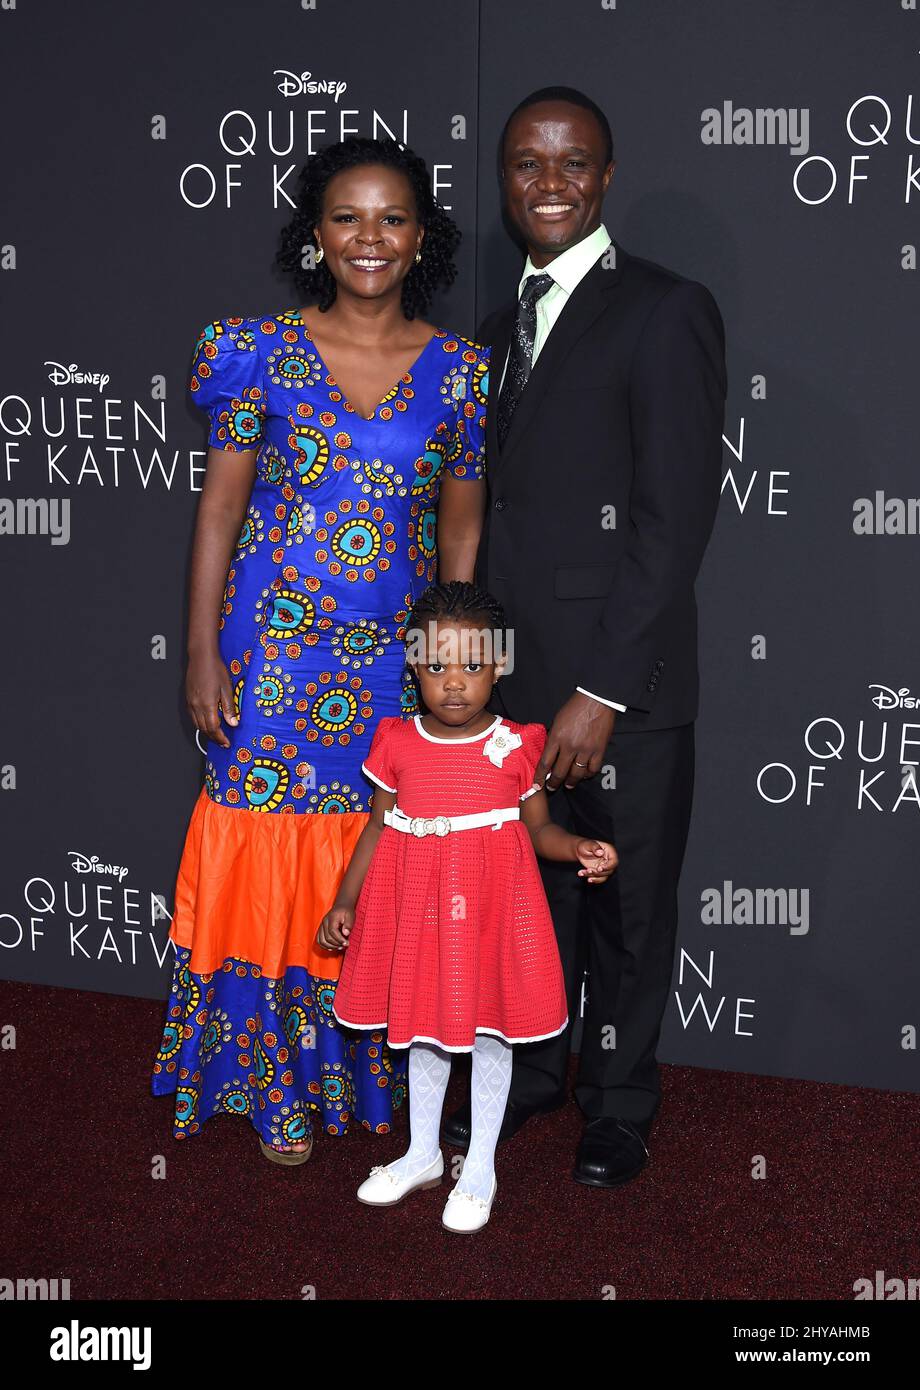 Robert Katende, Sarah Katende, la regina Katende partecipa al "Queen of Katwe" US Premiere tenuto al Teatro El Capitan Foto Stock